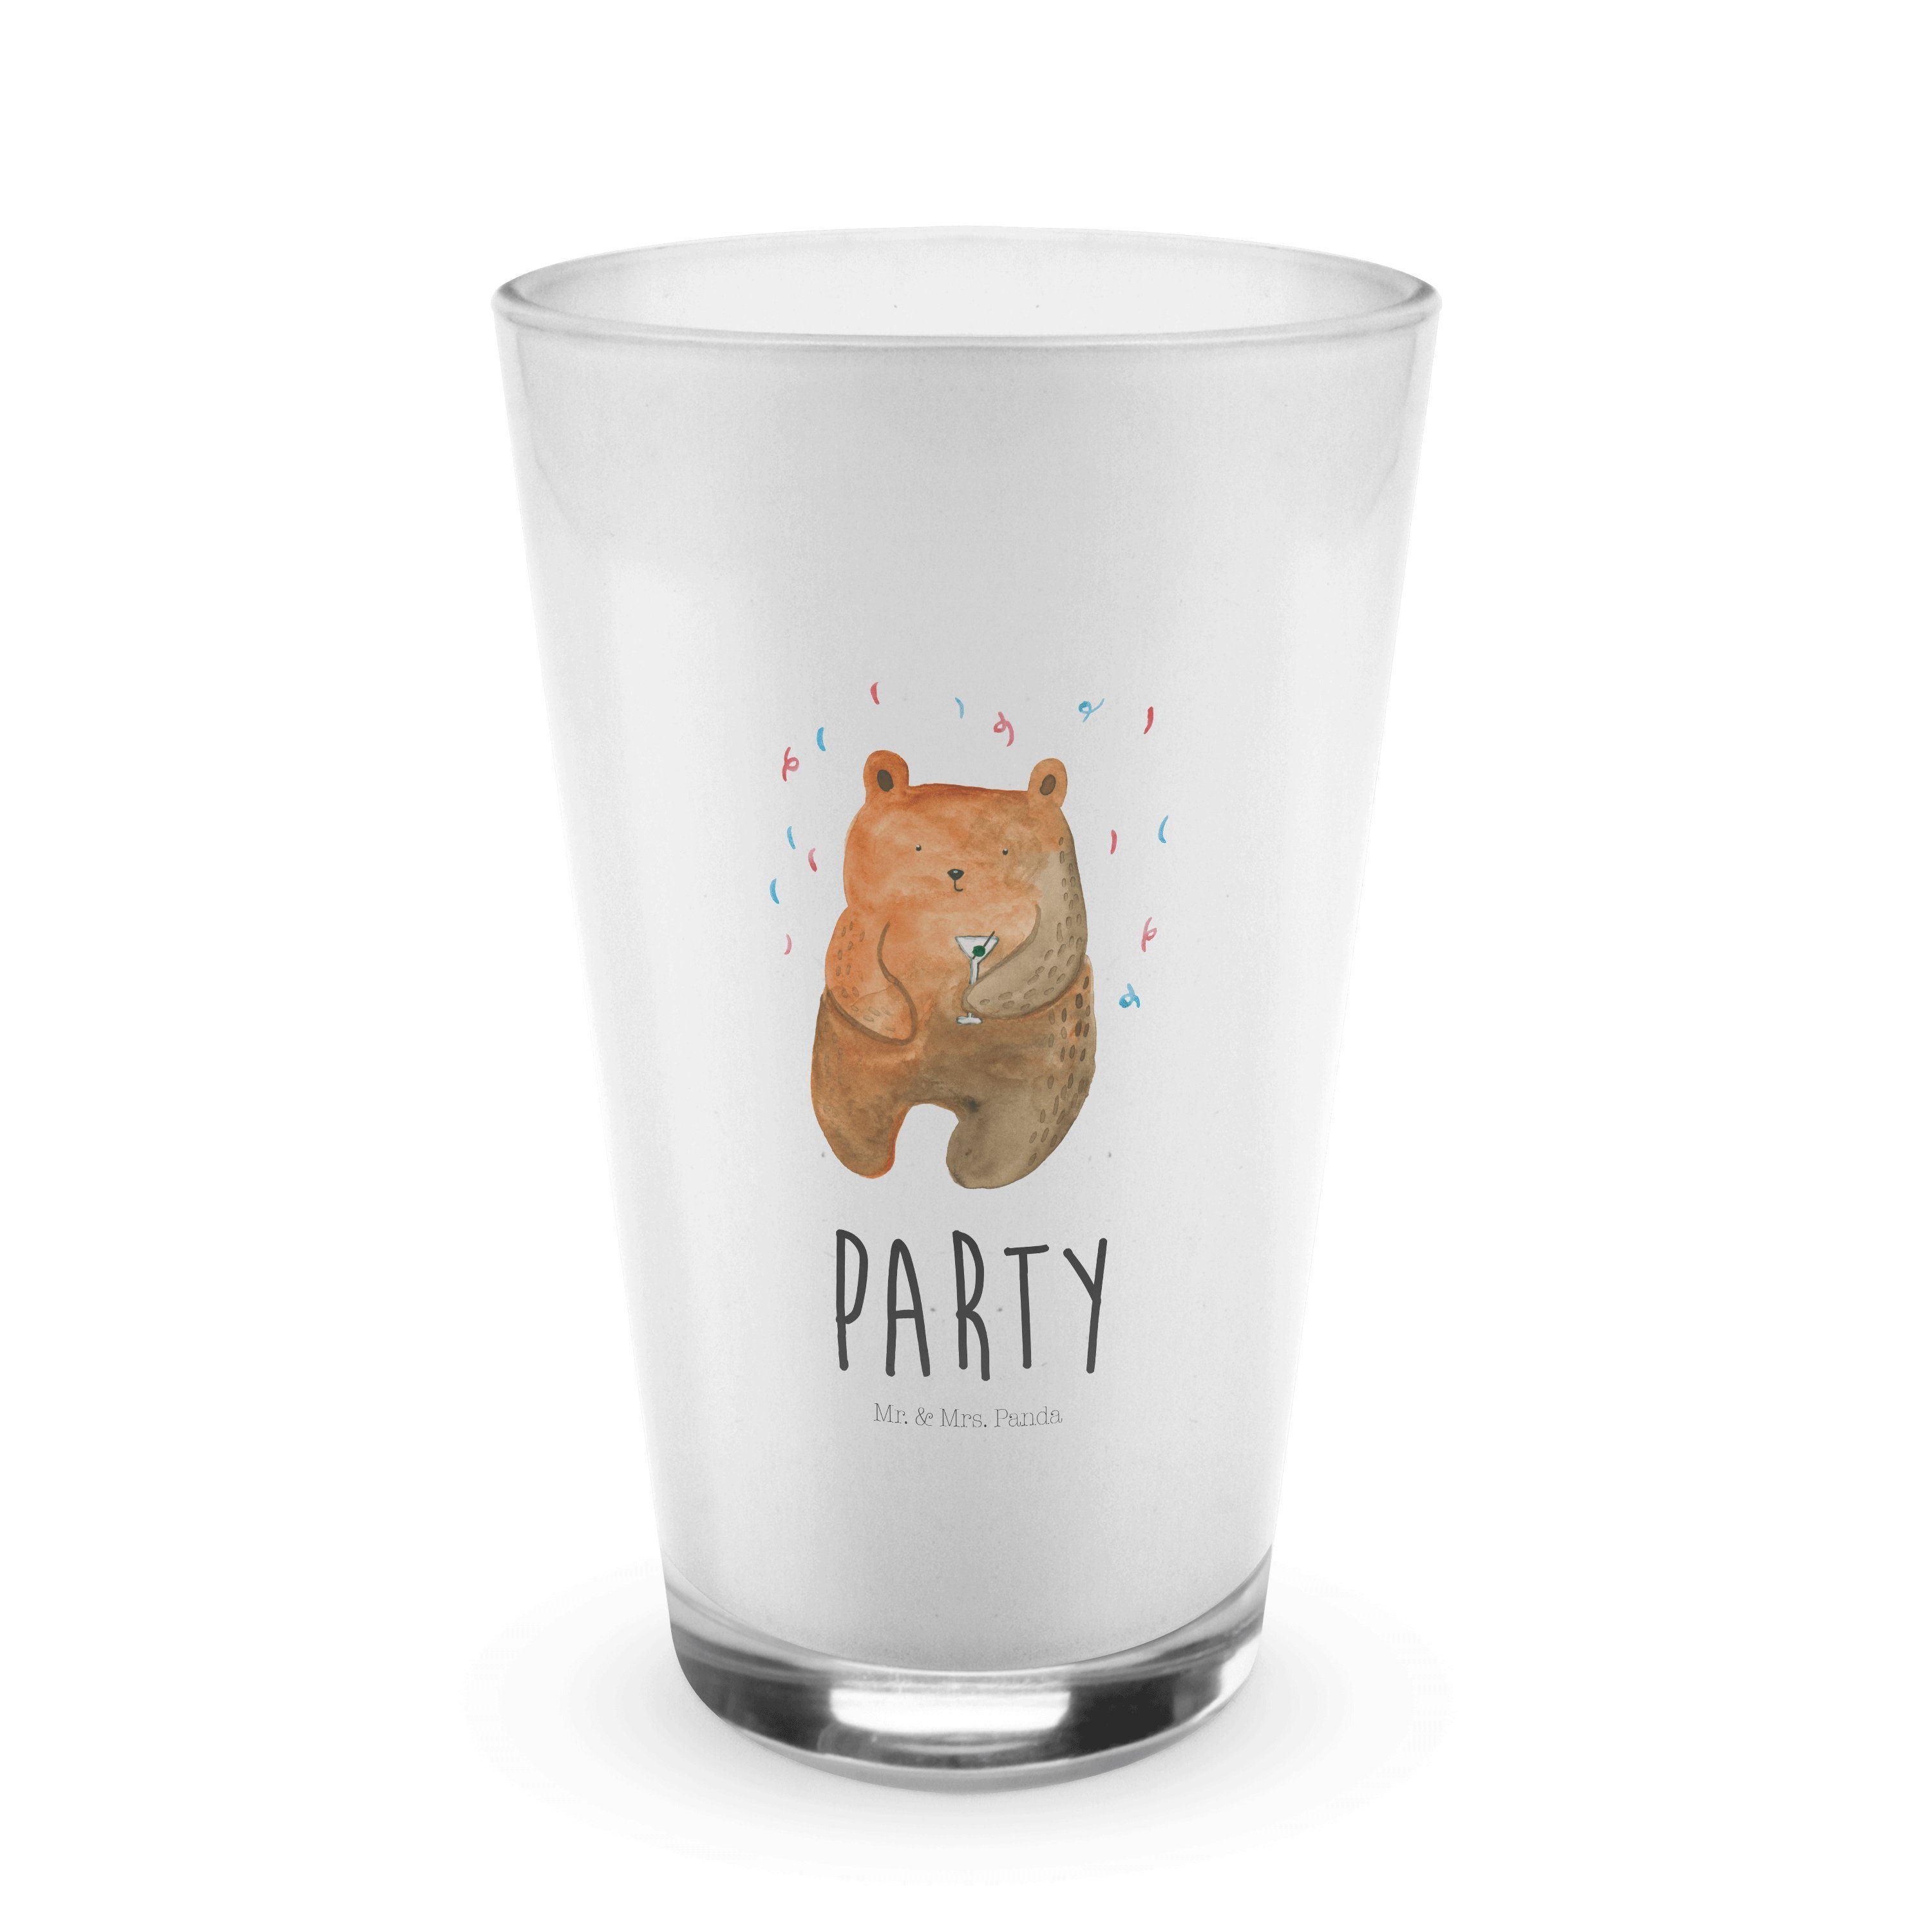 Mr. & Mrs. Panda Glas Bär Party - Transparent - Geschenk, Mitbringsel, Gute Laune, Teddy, C, Premium Glas